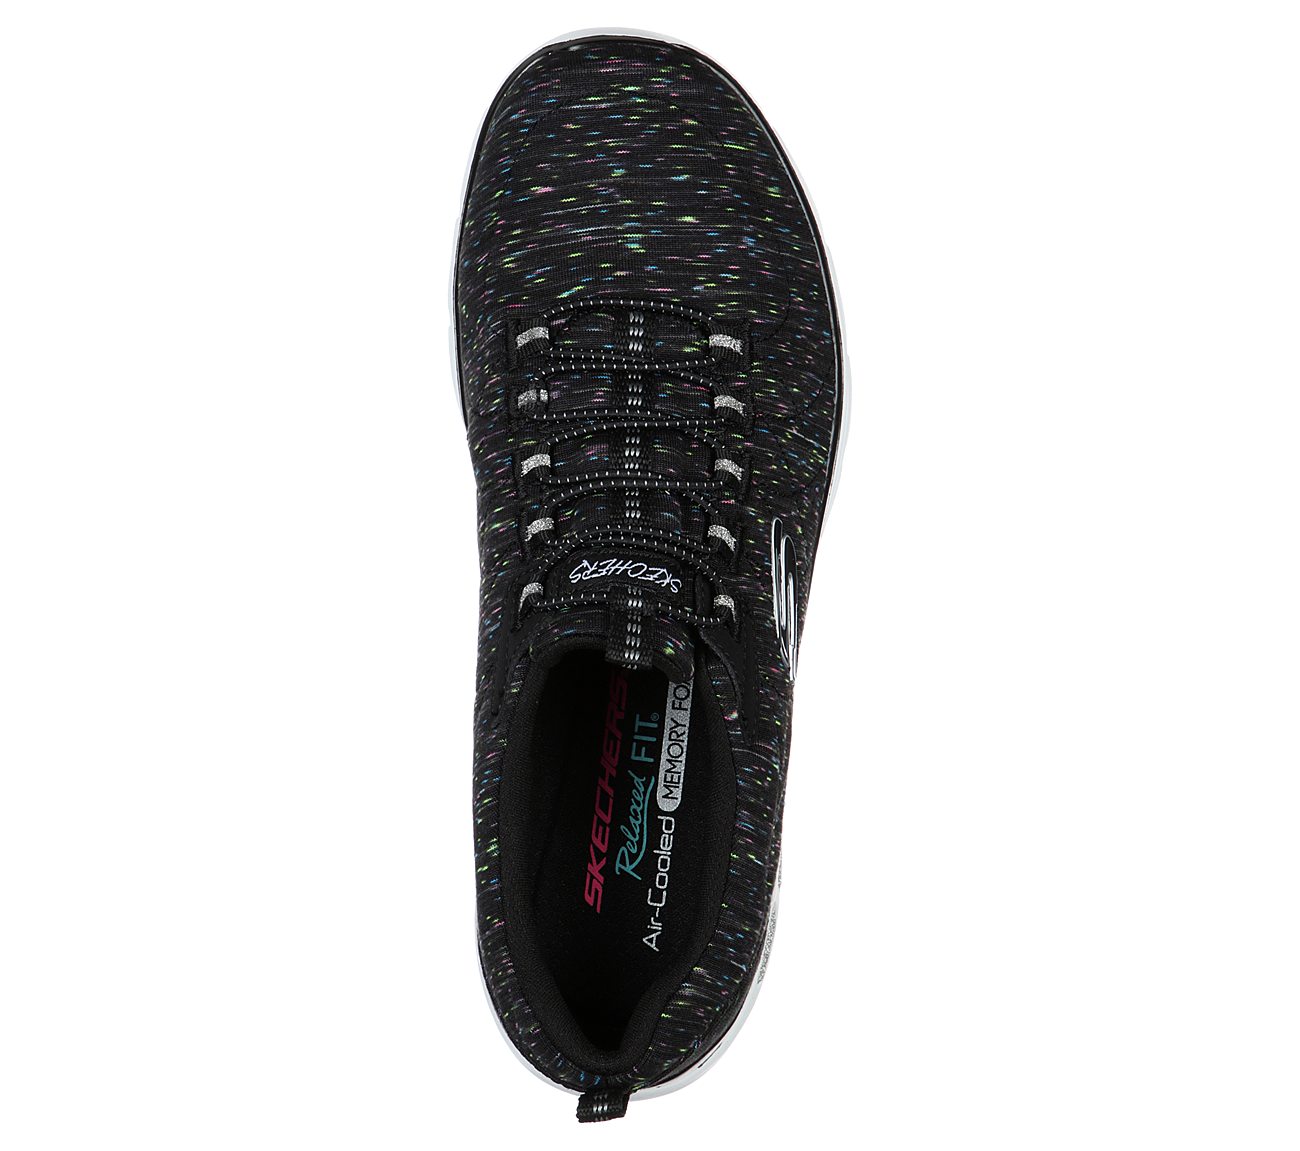 EMPIRE D'LUX - SPARKLING POPS, BLACK/MULTI Footwear Top View